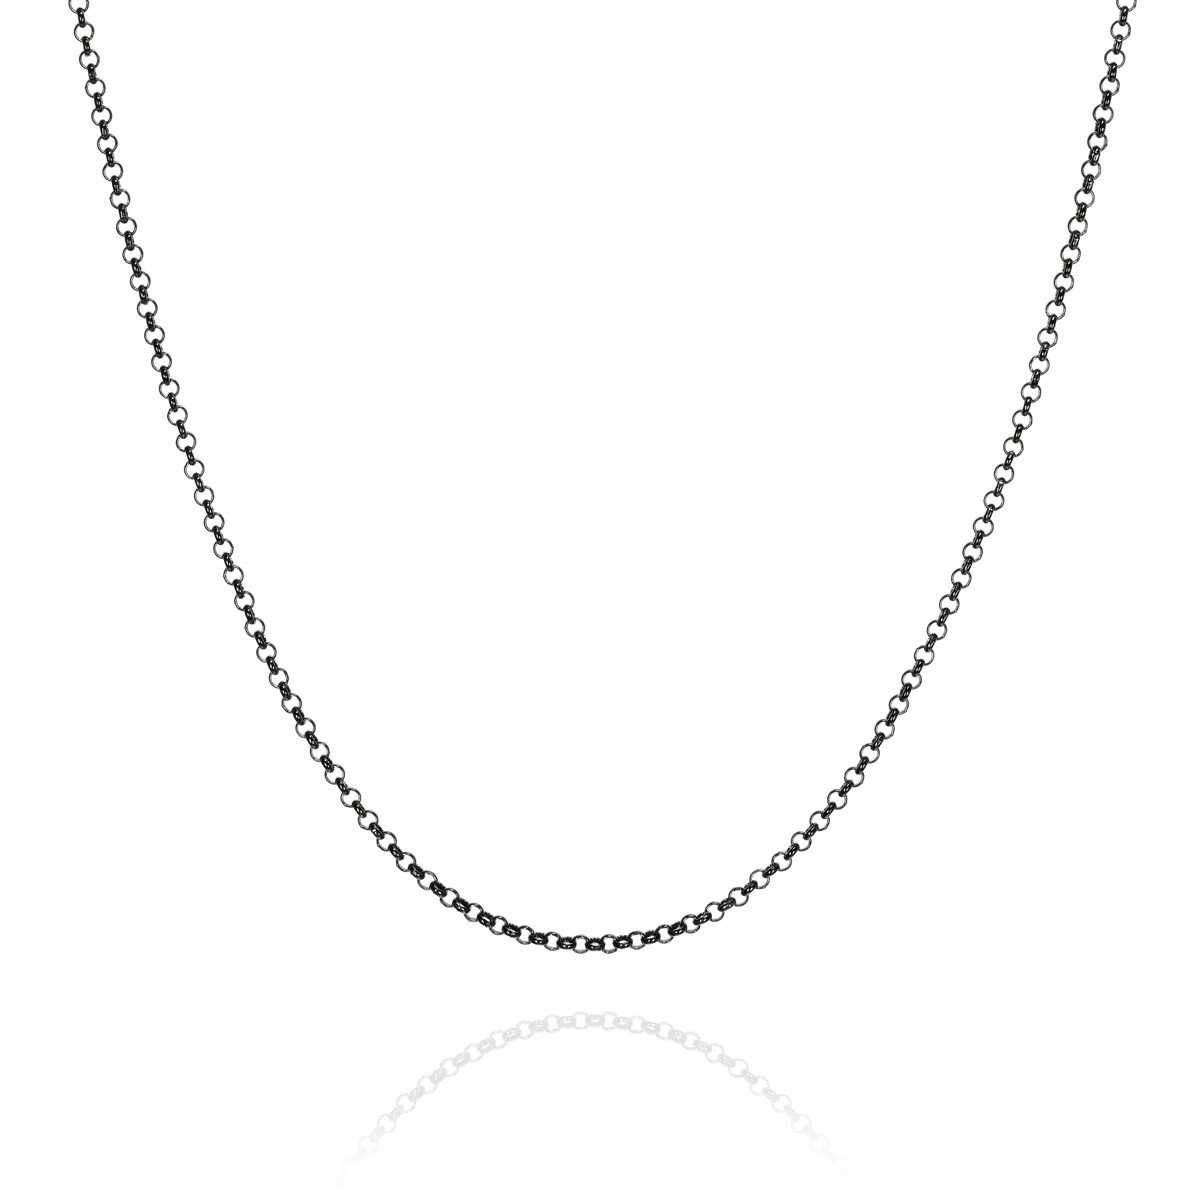 Chain in Silver 40 cm. Black Ruthenium